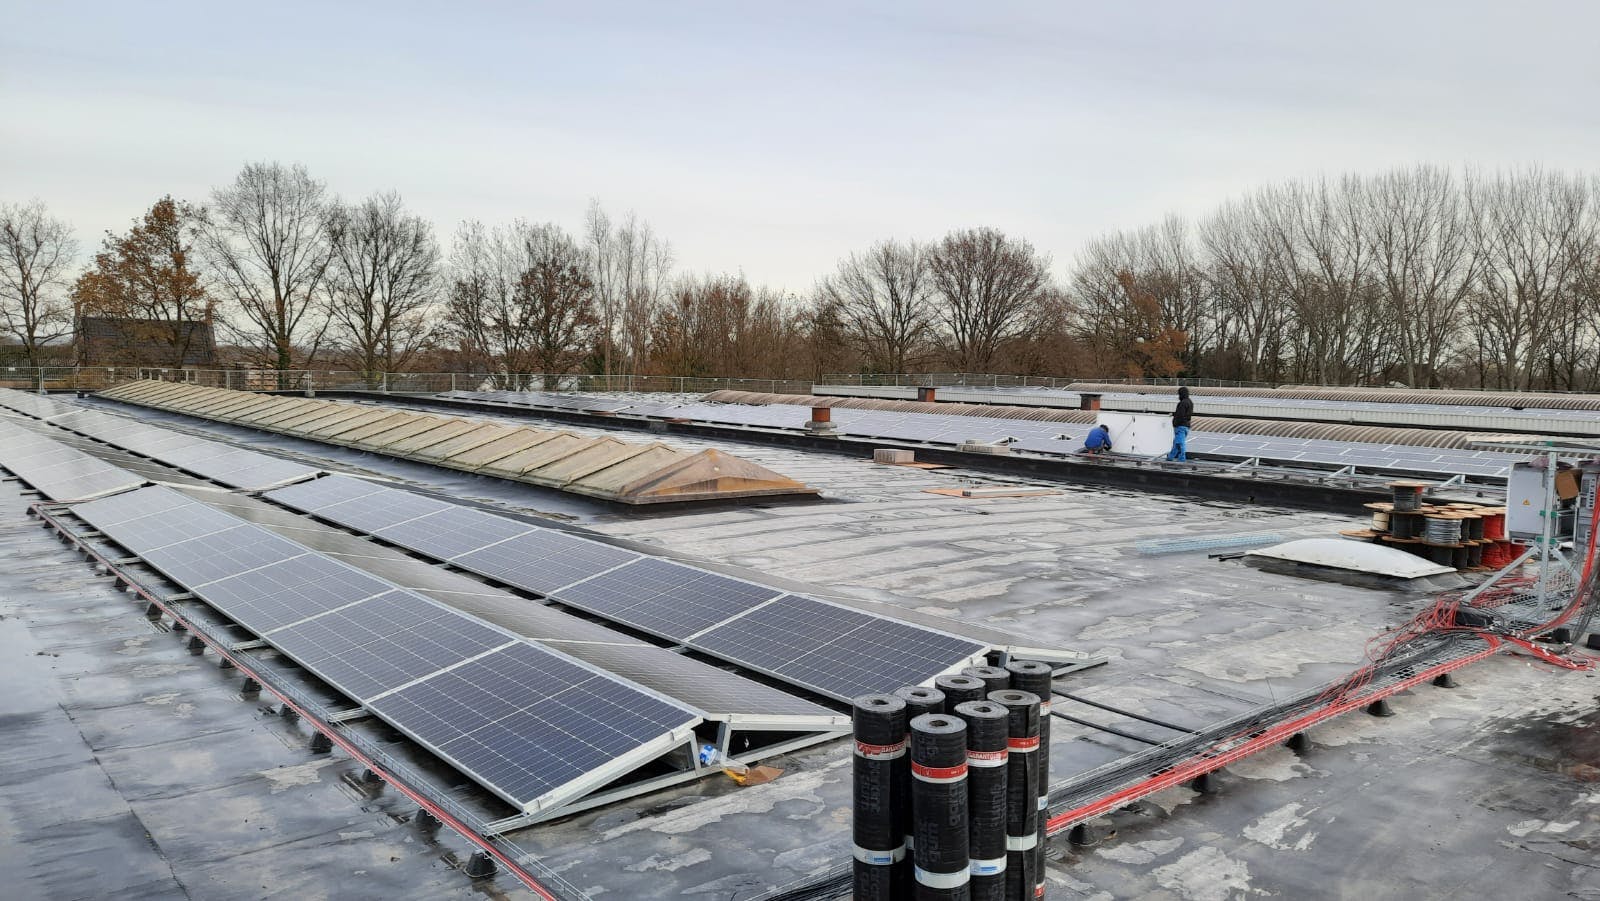 Valkenswaard rooftop project in the Netherlands